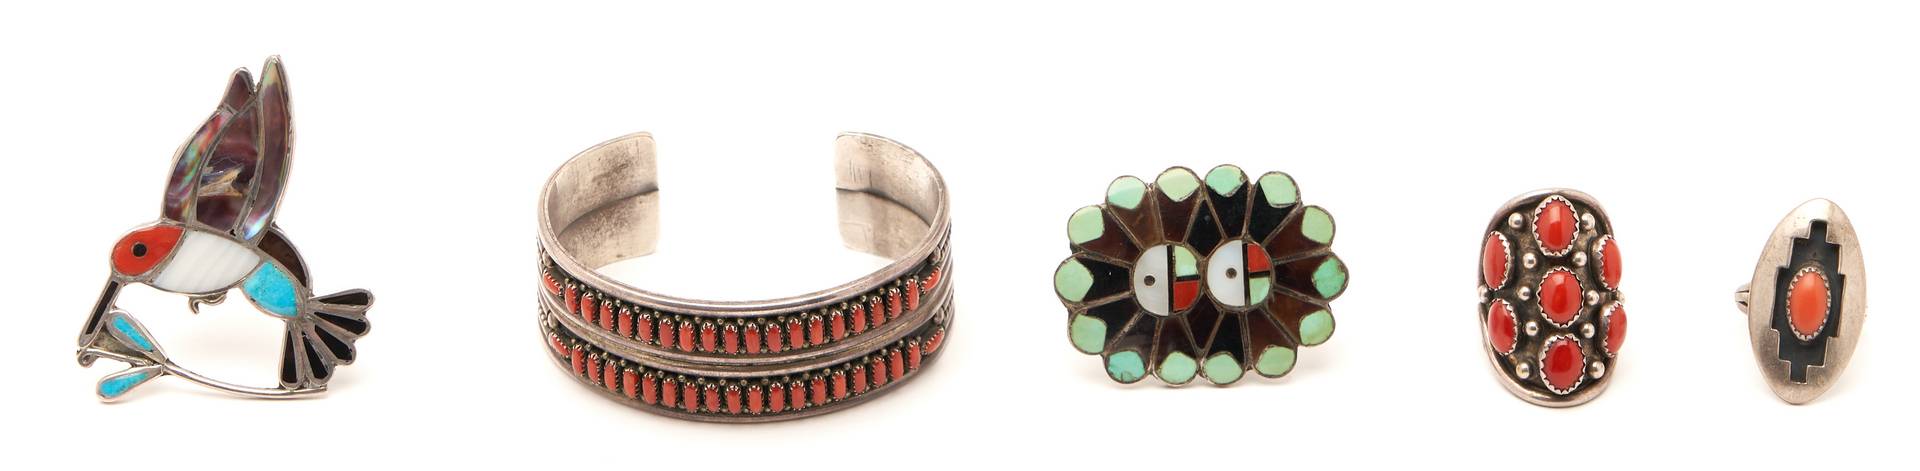 Lot 618: 12 Pcs. Native American Jewelry Items, incl. Zuni